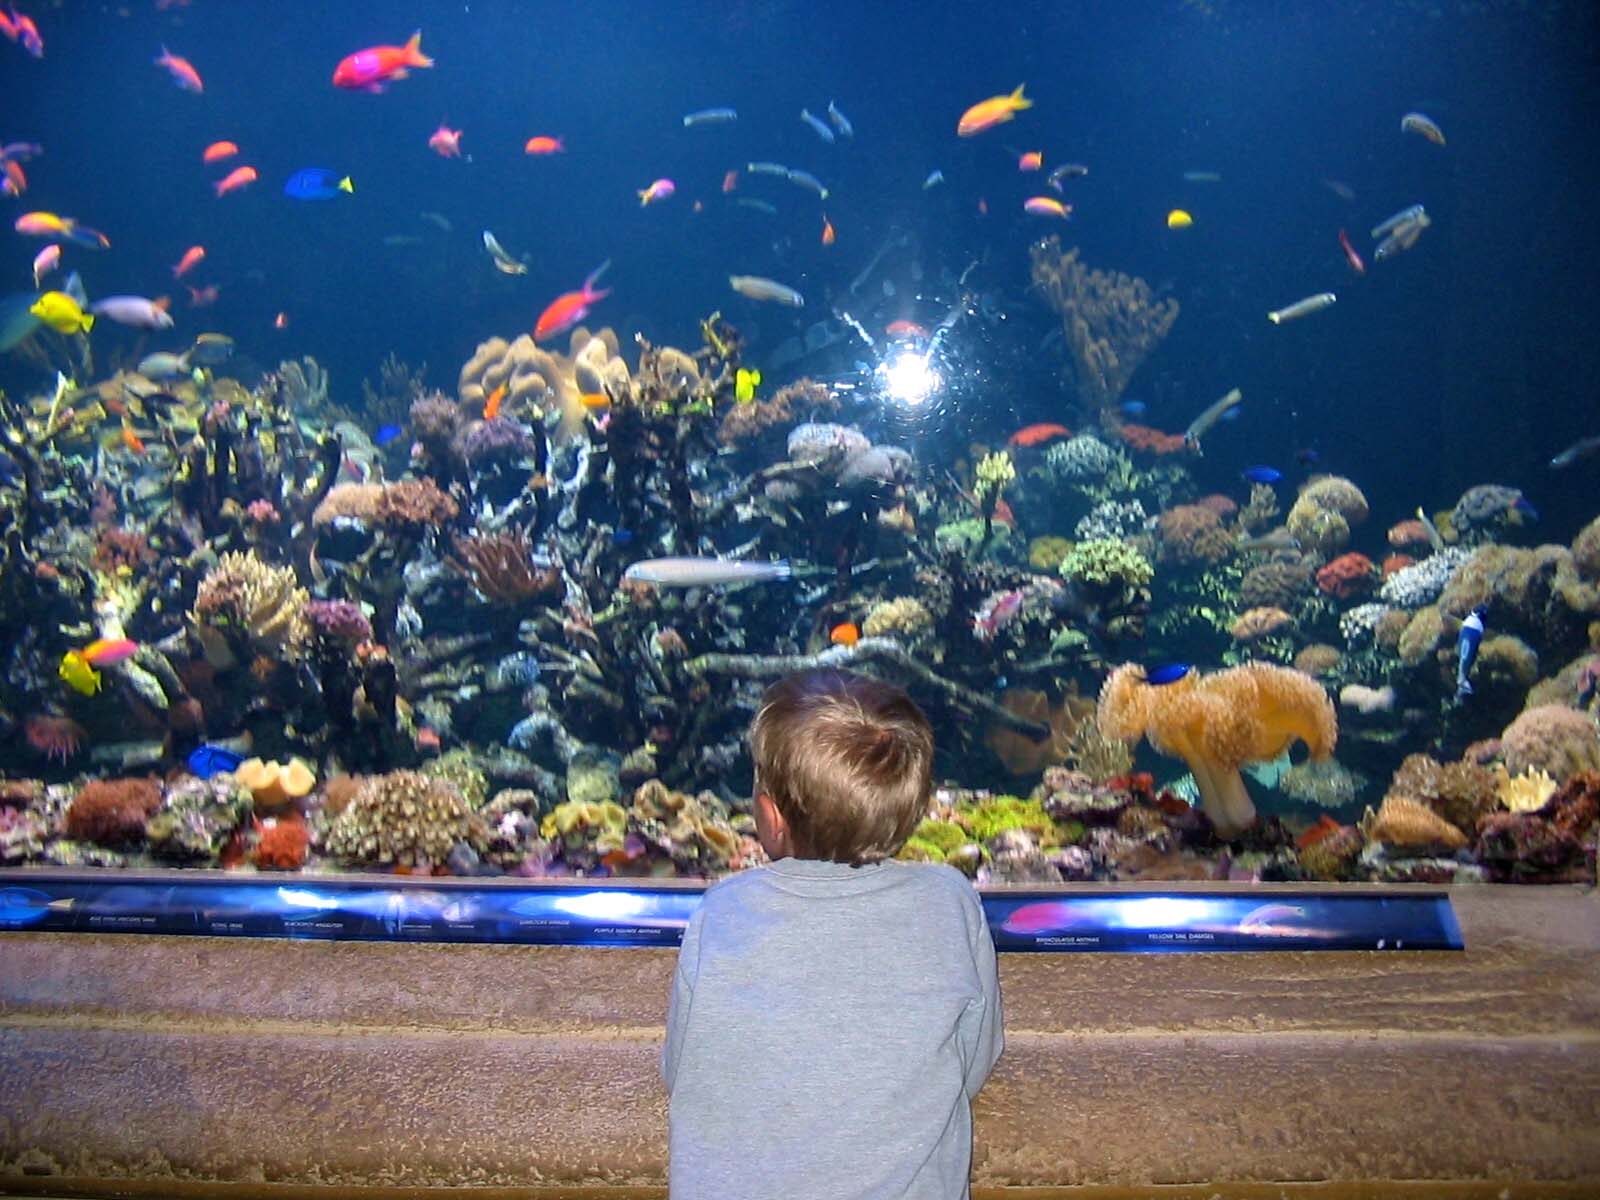 Long Island Aquarium 